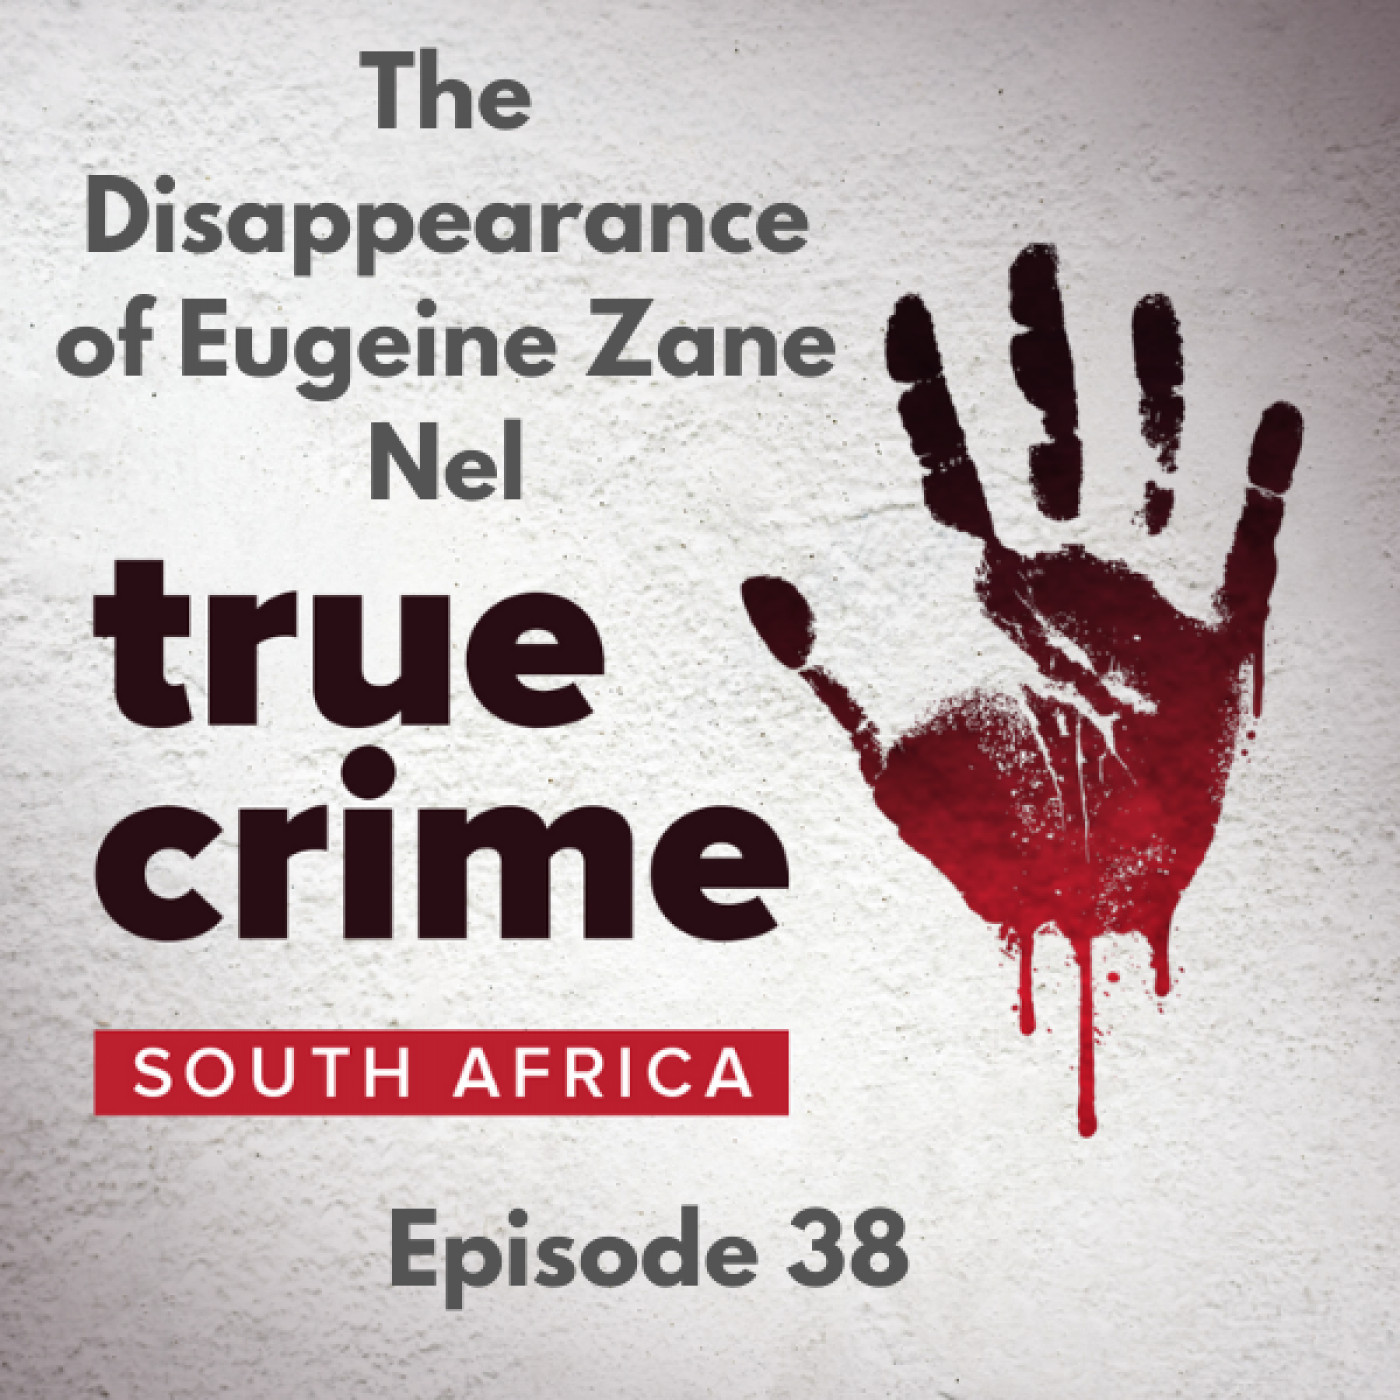 Episode 38 - The Disappearance of Eugeine Zane Nel